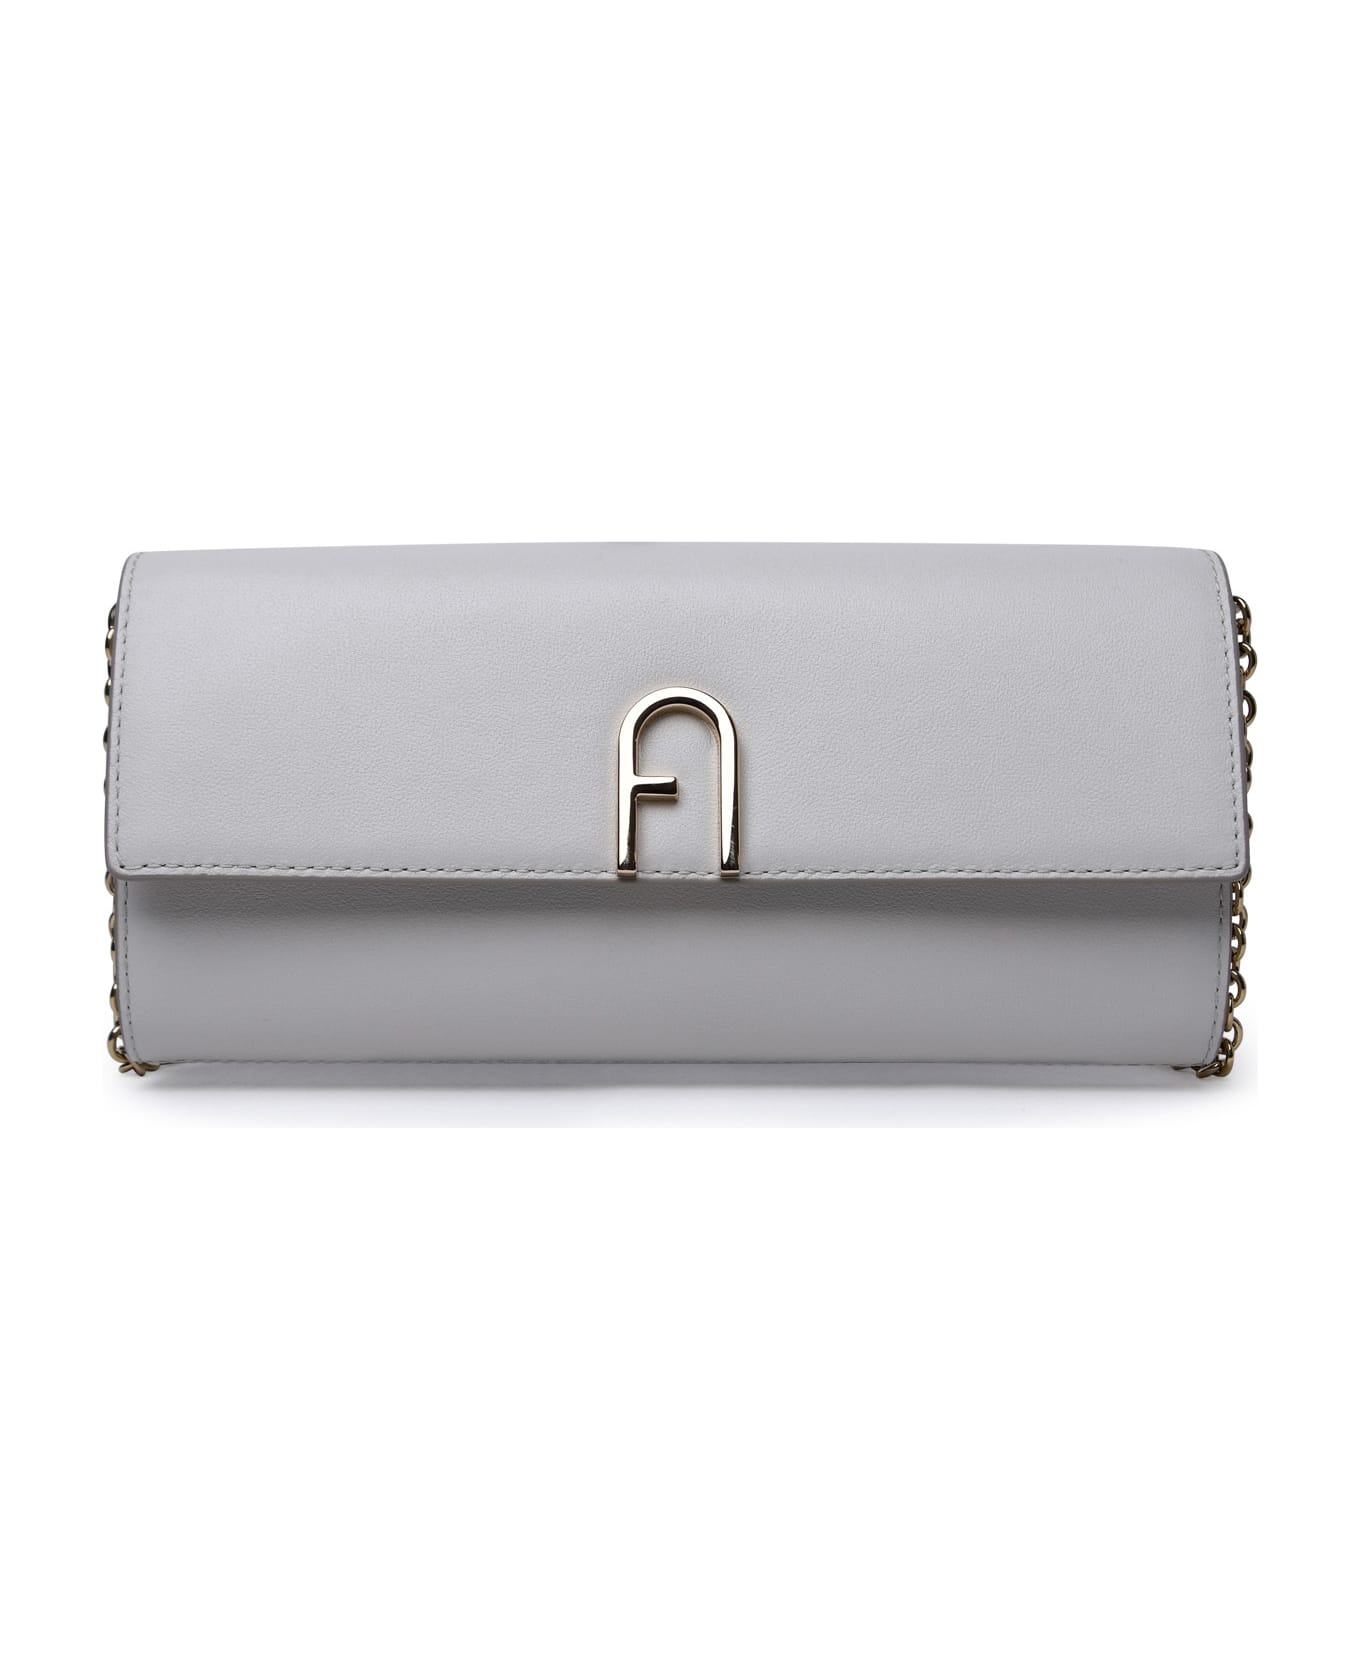 Furla 'flow' Mini White Leather Crossbody Bag - White クラッチバッグ